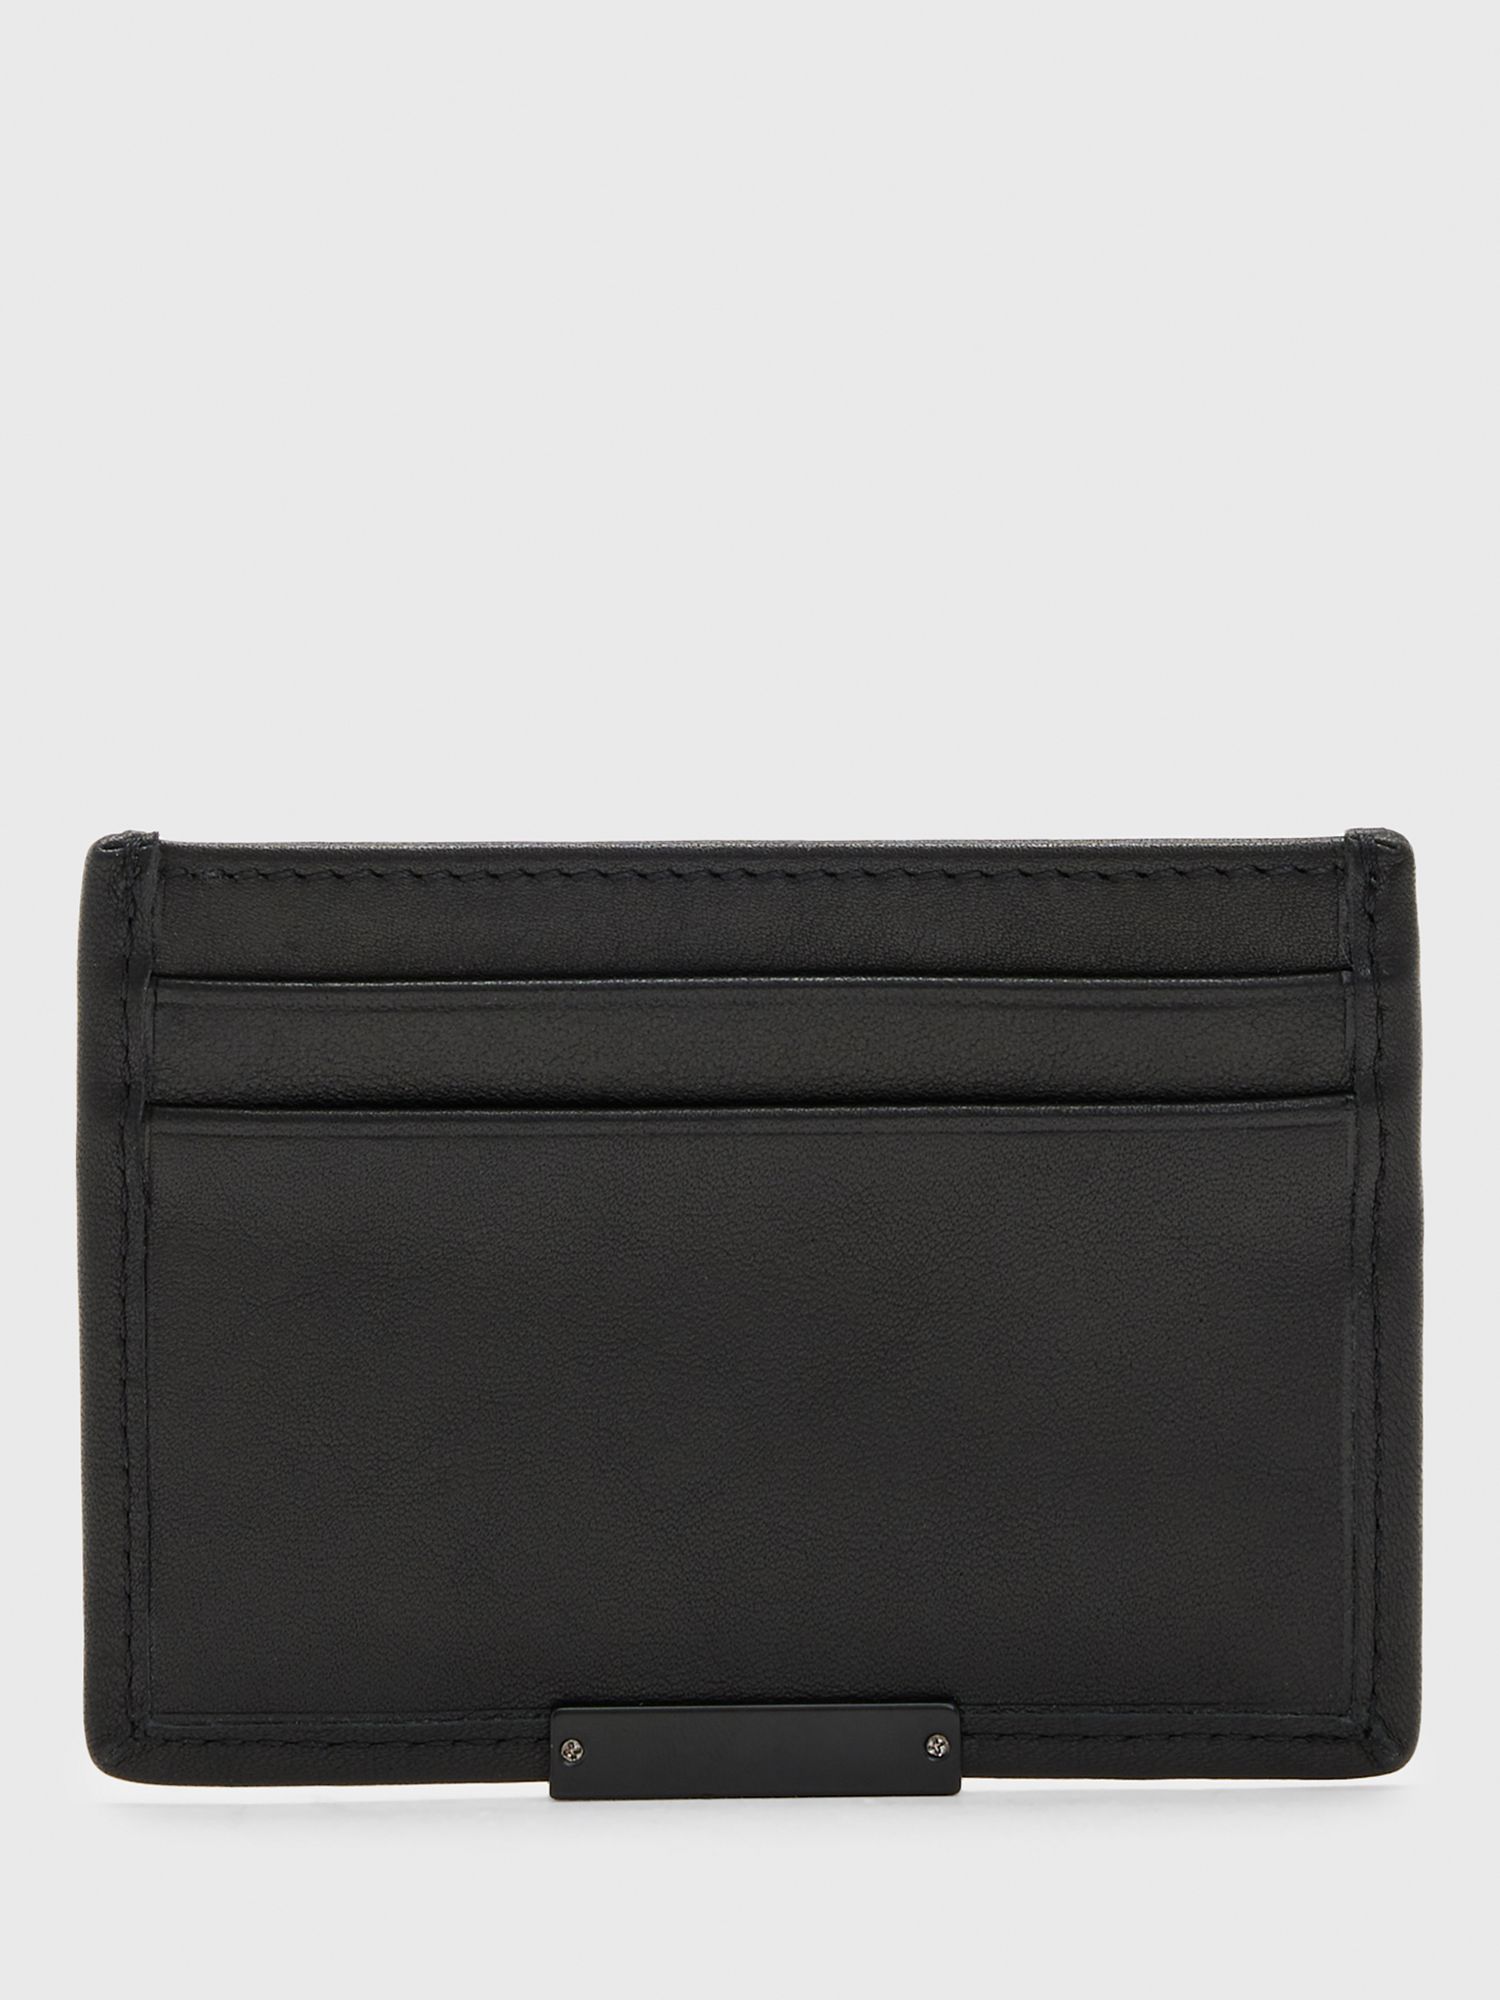 AllSaints Dove Cardholder Wallet, Black, One Size